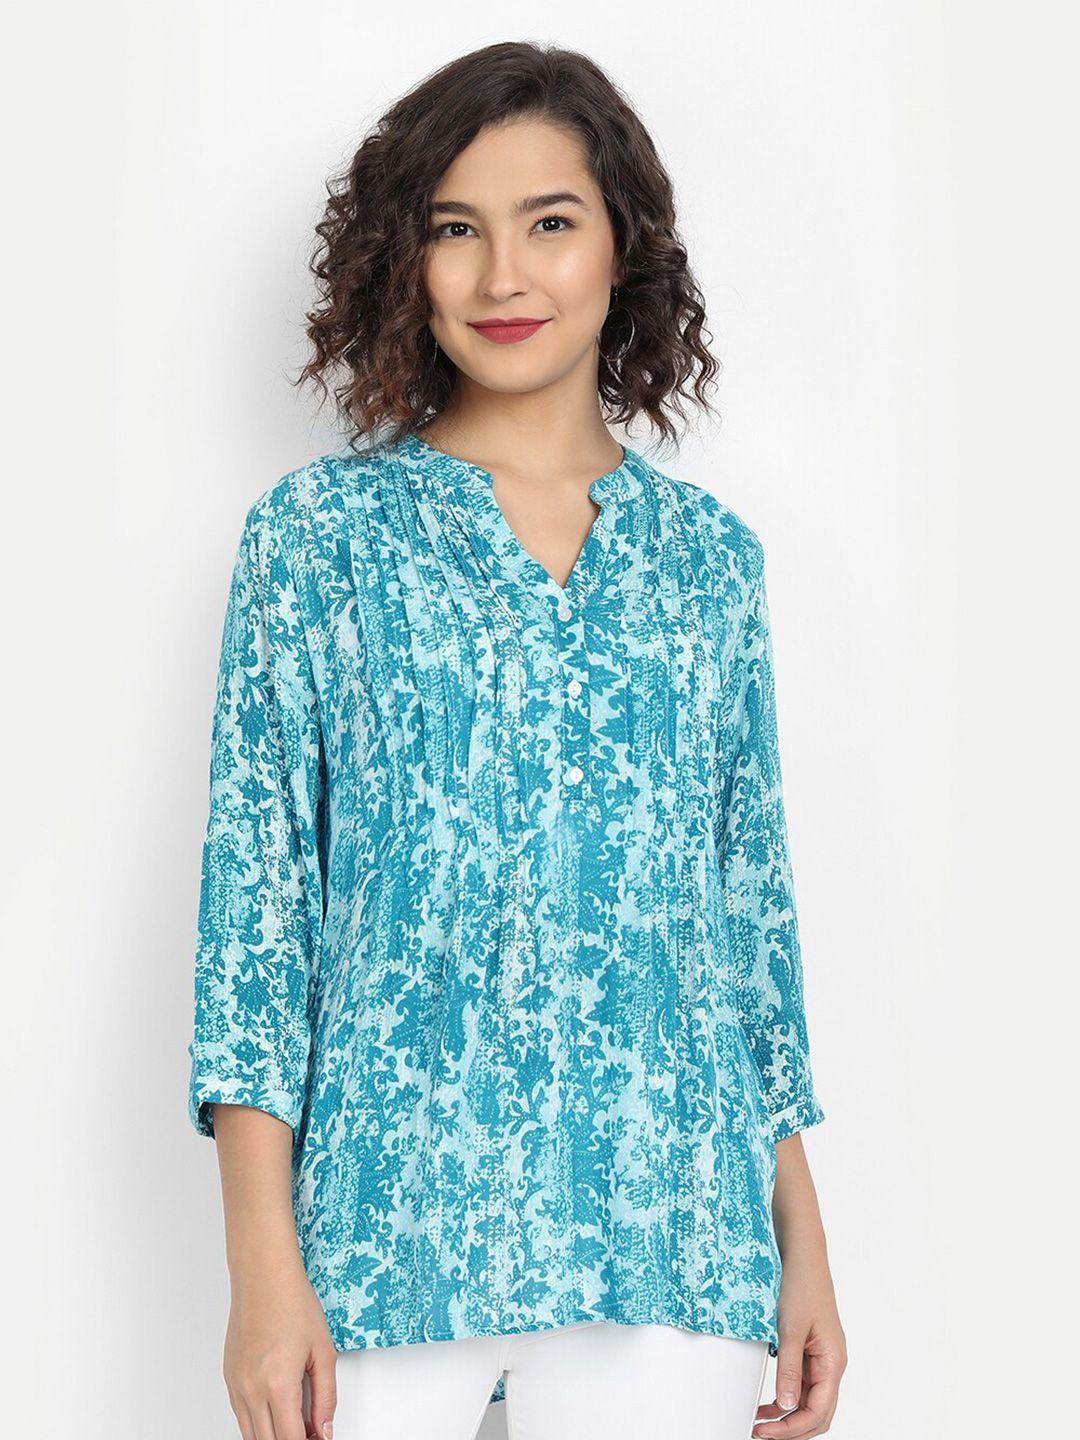 ix-impression-turquoise-blue-&-white-mandarin-collar-shirt-style-top